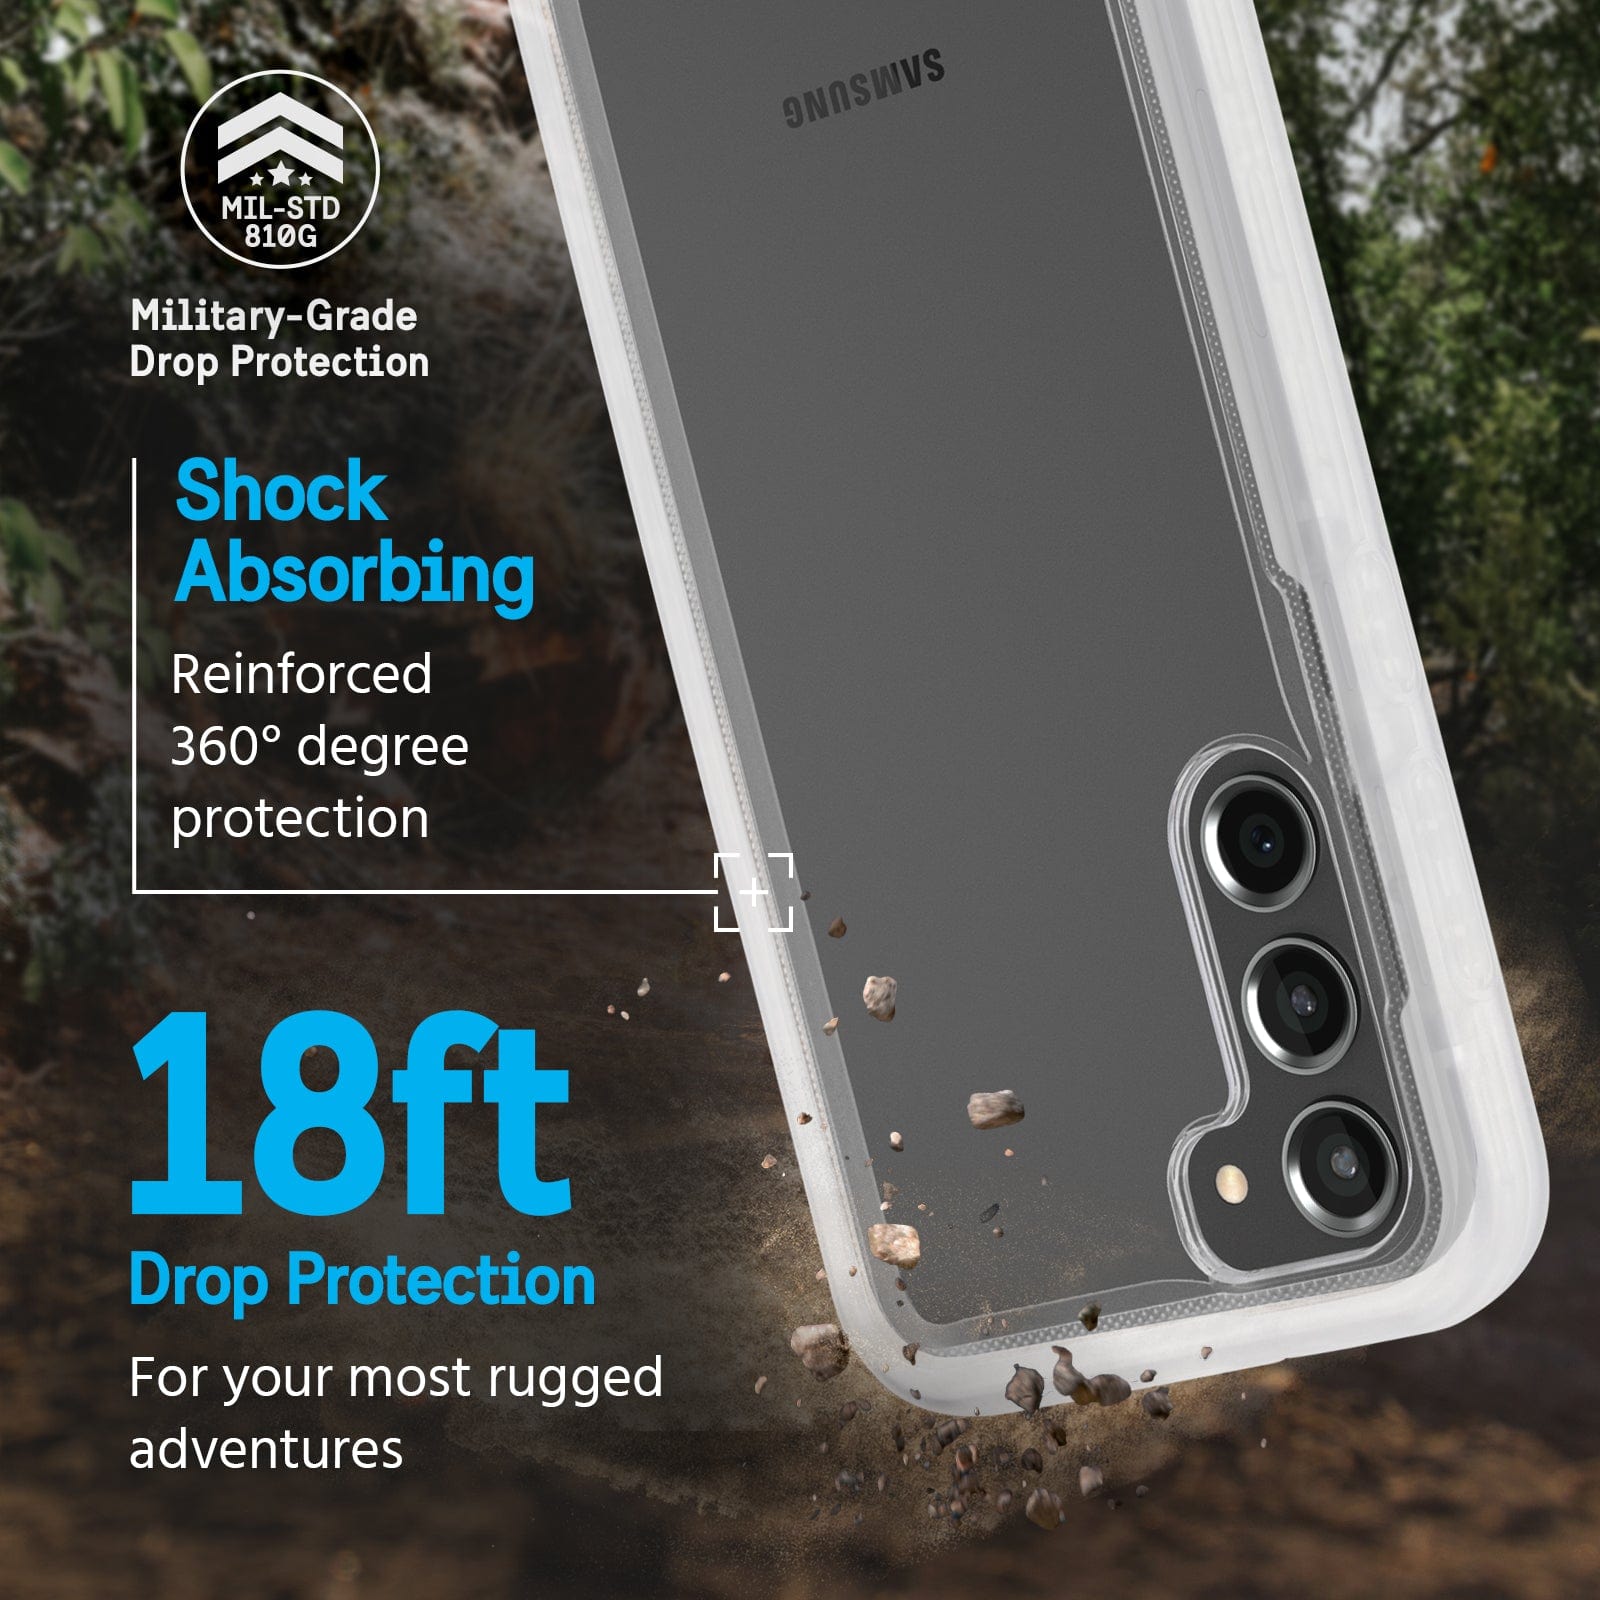 Samsung Galaxy S23+ Rugged Case